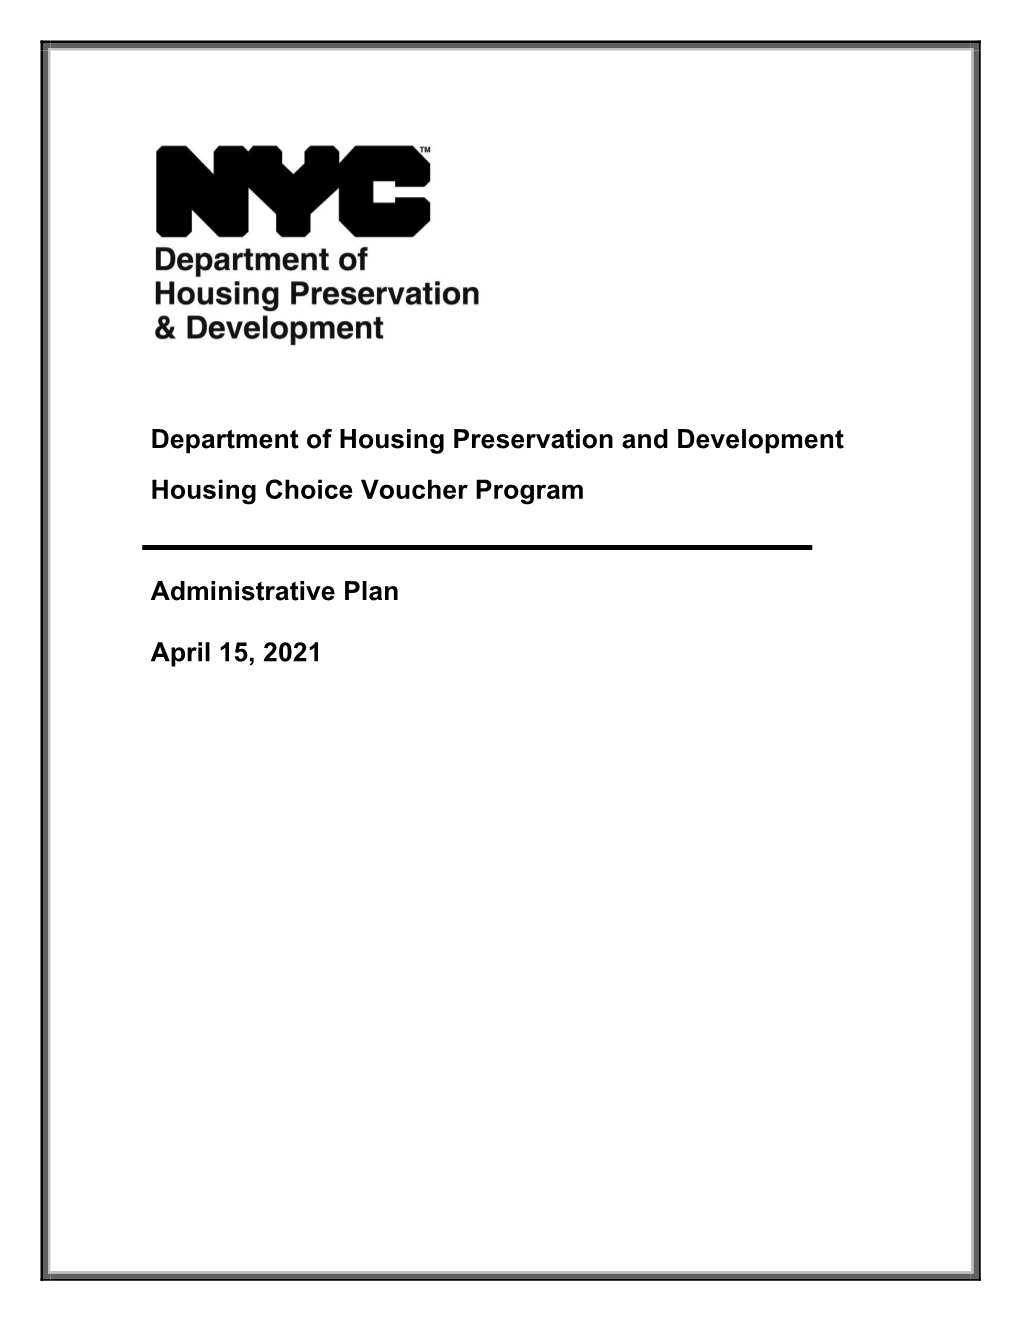 HPD's Housing Choice Voucher Program Administrative Plan